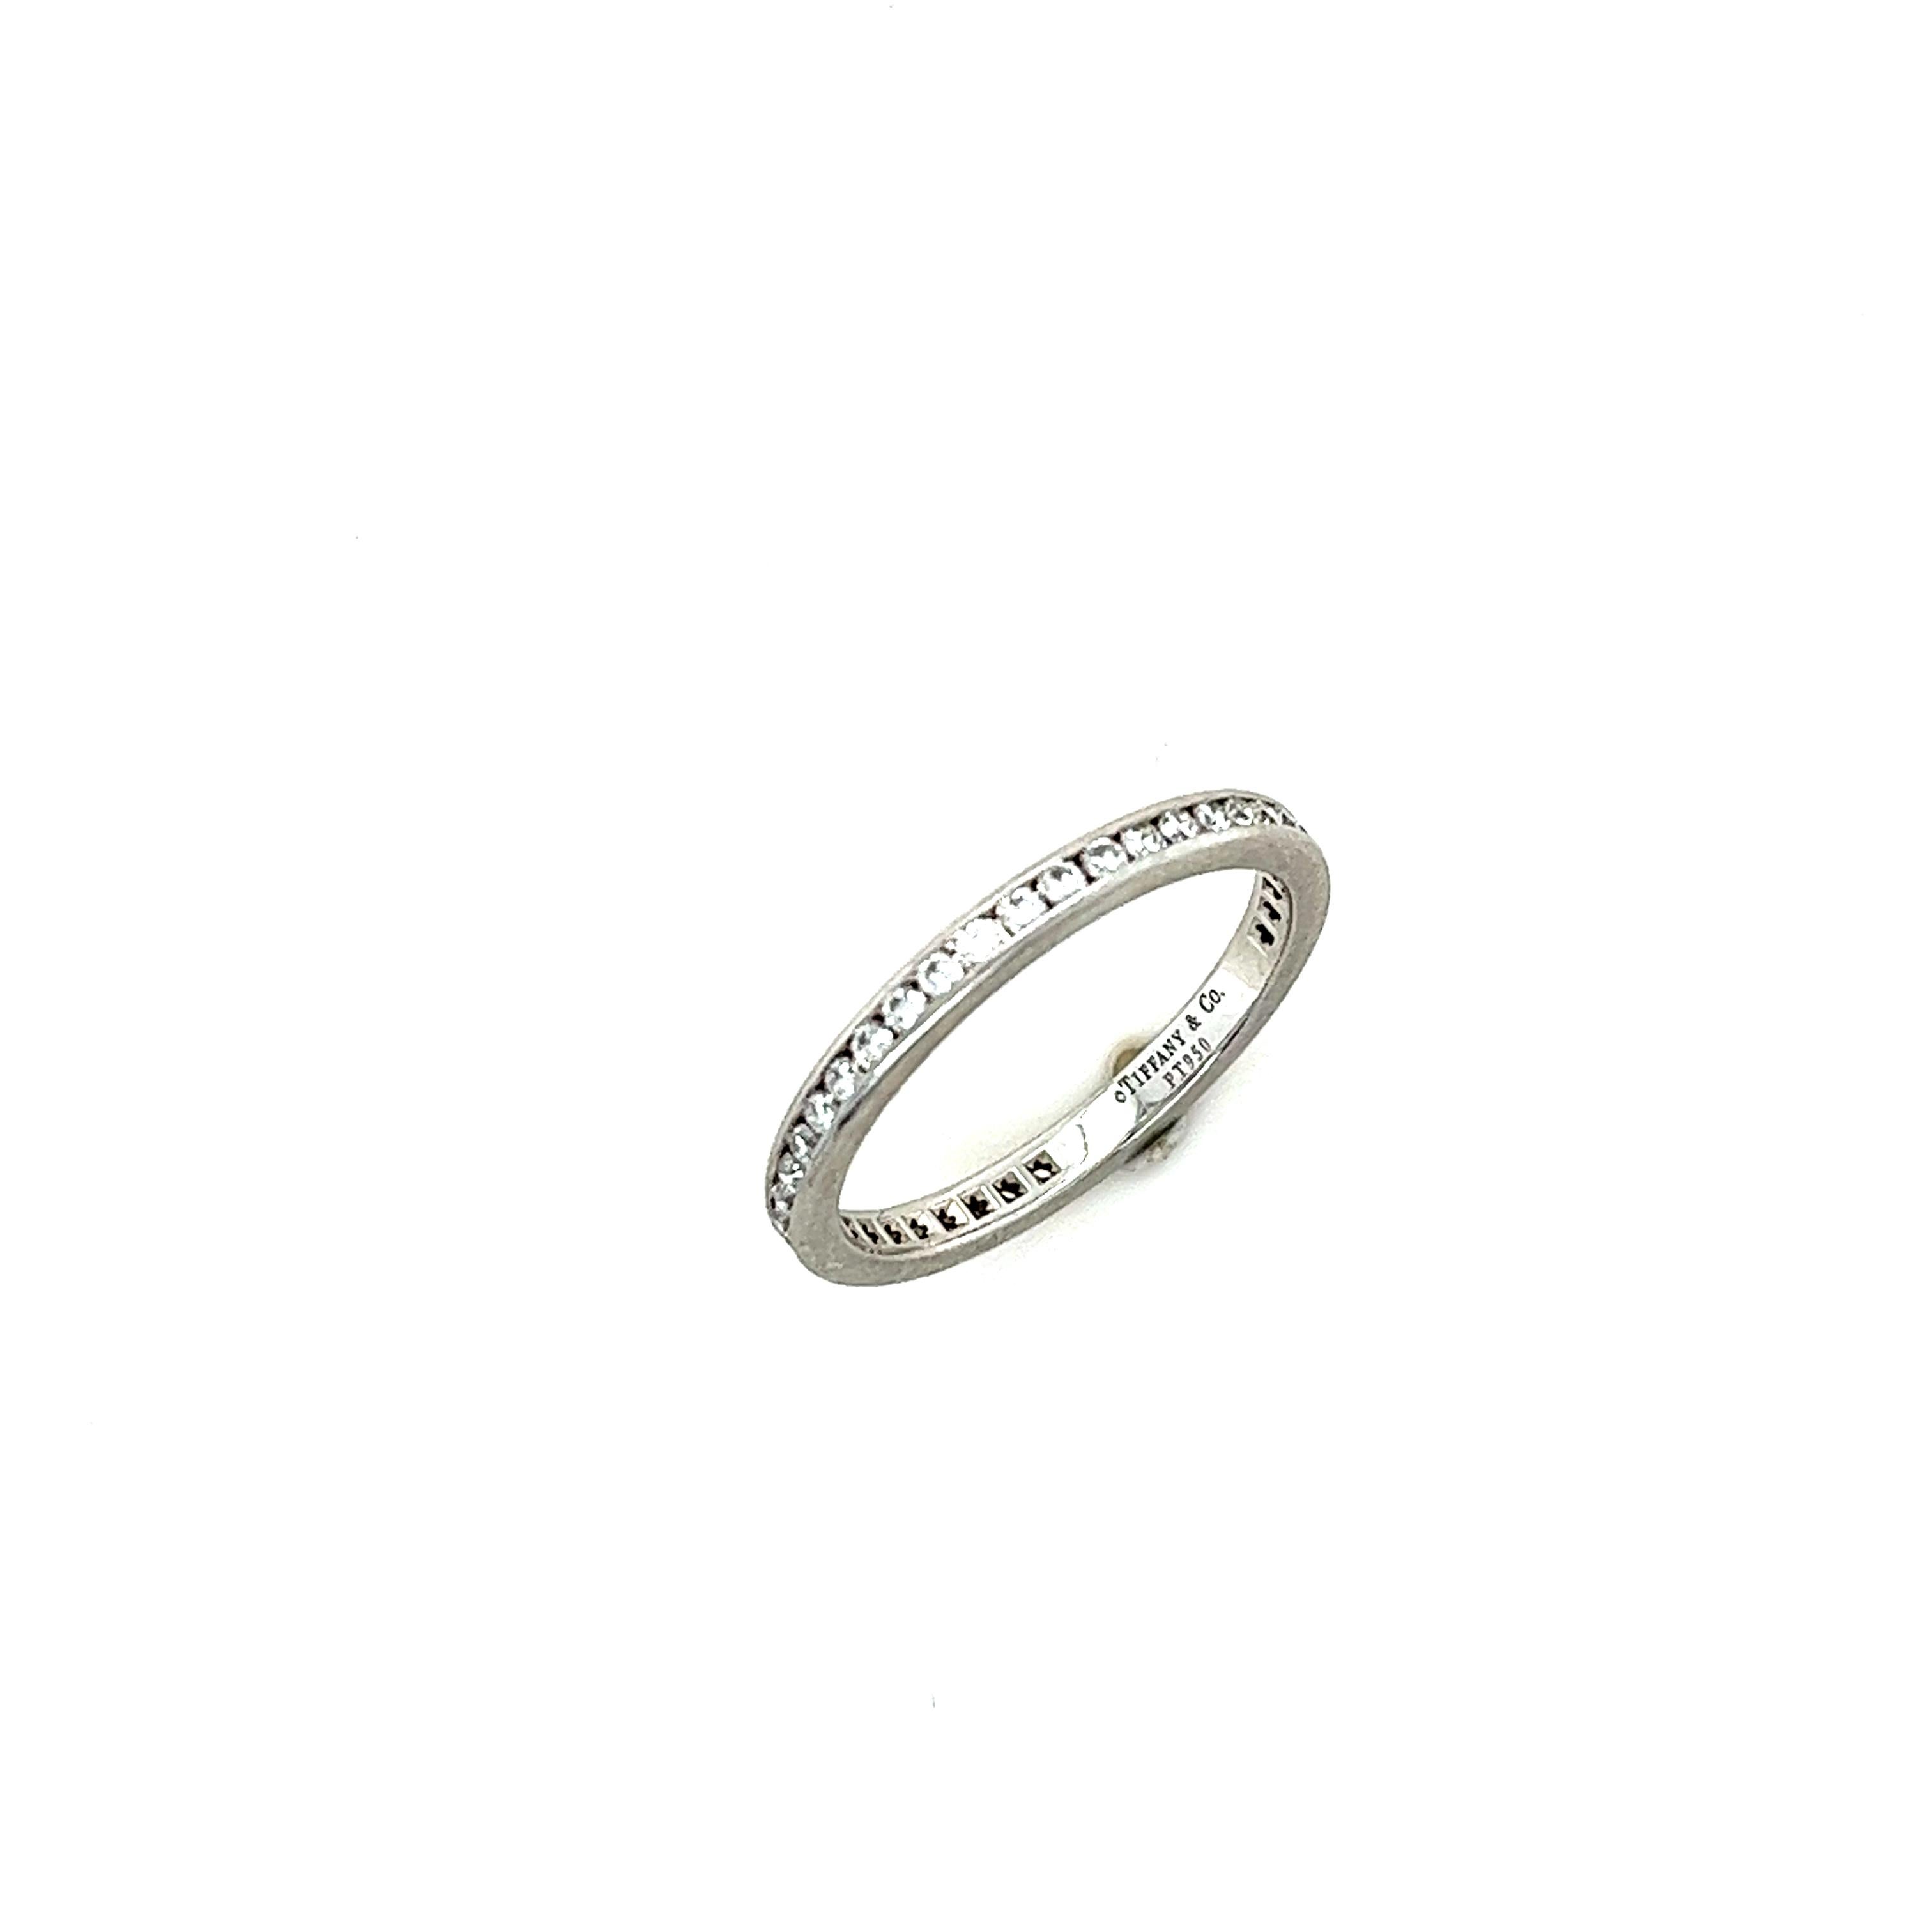 A Tiffany & Co Diamond Full Circle Wedding Ring, with 42 round brilliant cut diamonds channel set in platinum on a 2.3mm band.

Diamonds 42 = 0.55ct (estimated), F/VS
Metal: Platinum PT950
Carat: 0.55ct
Colour: F
Clarity: VS
Cut: Round